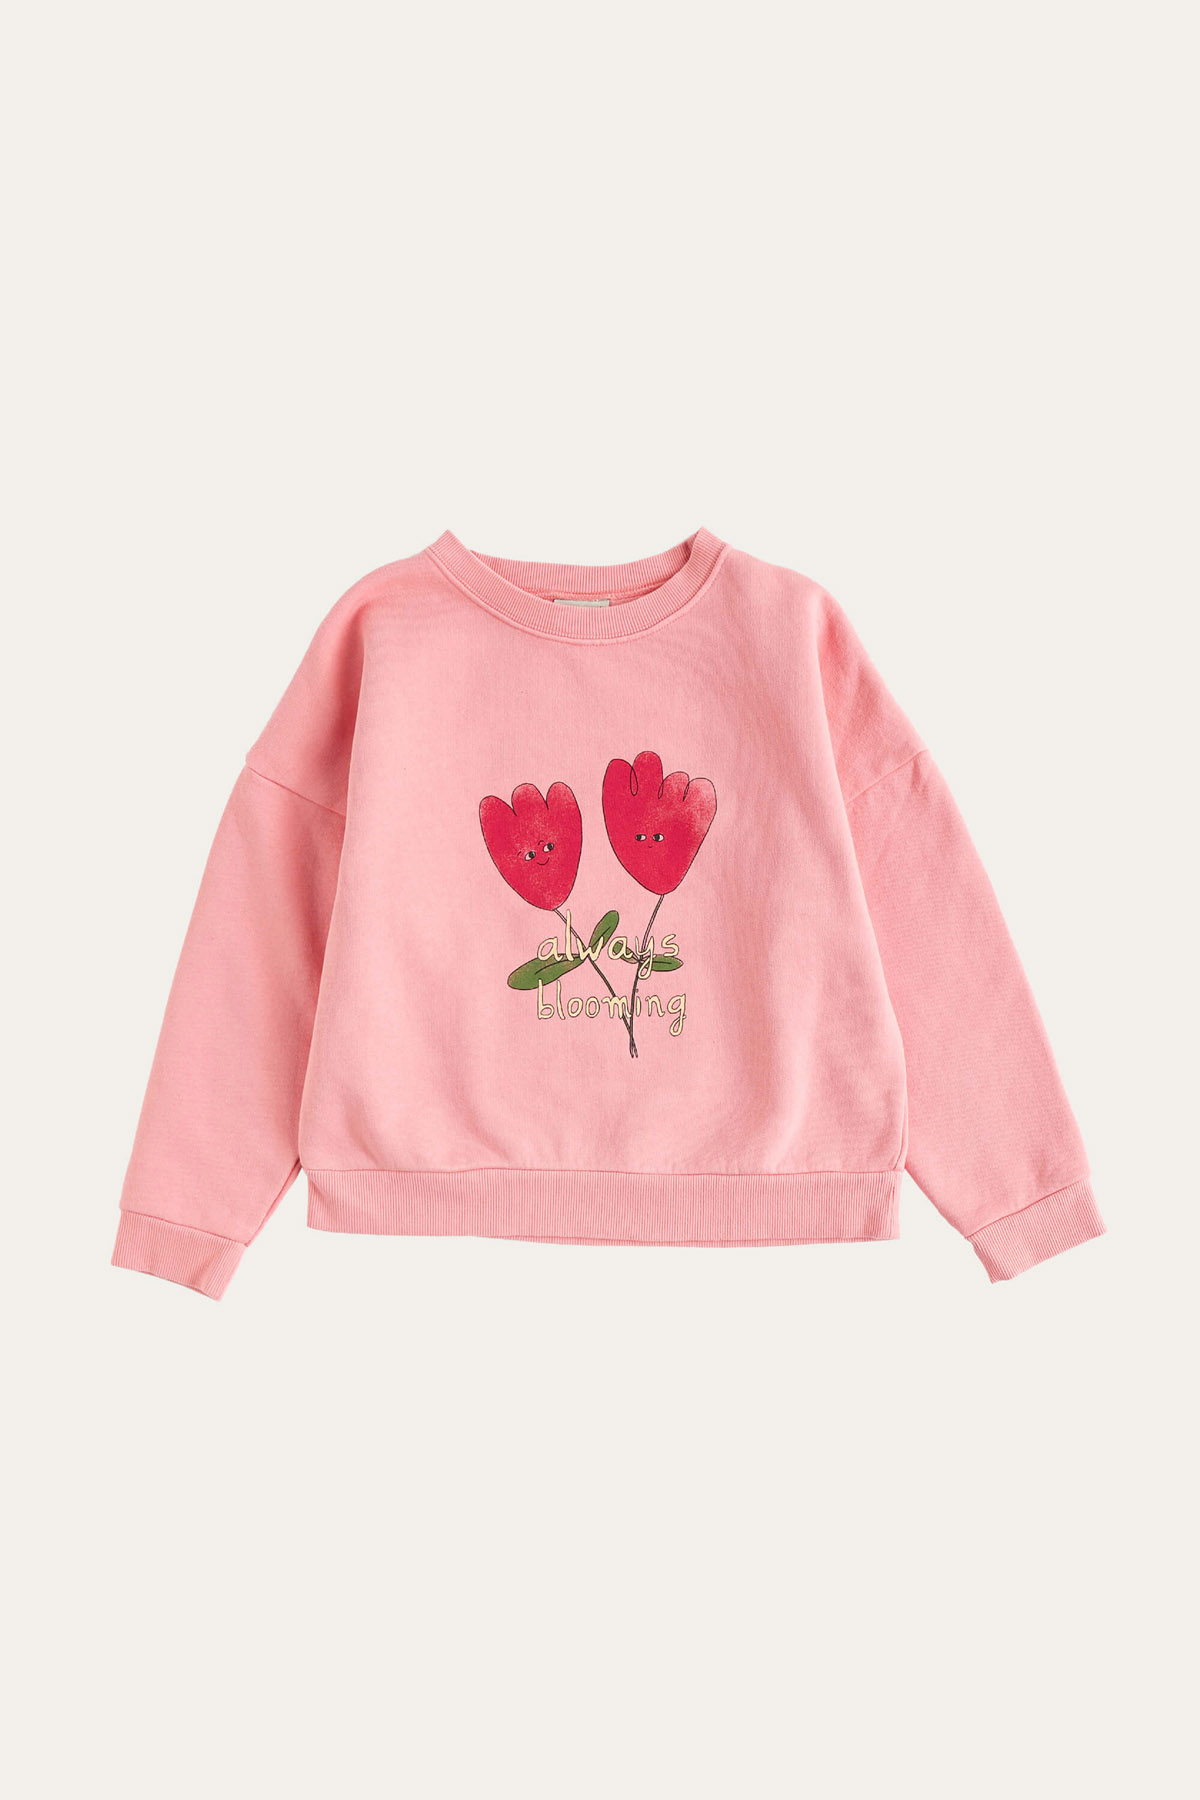 [THE CAMPAMENTO]Flowers Sweatshirt